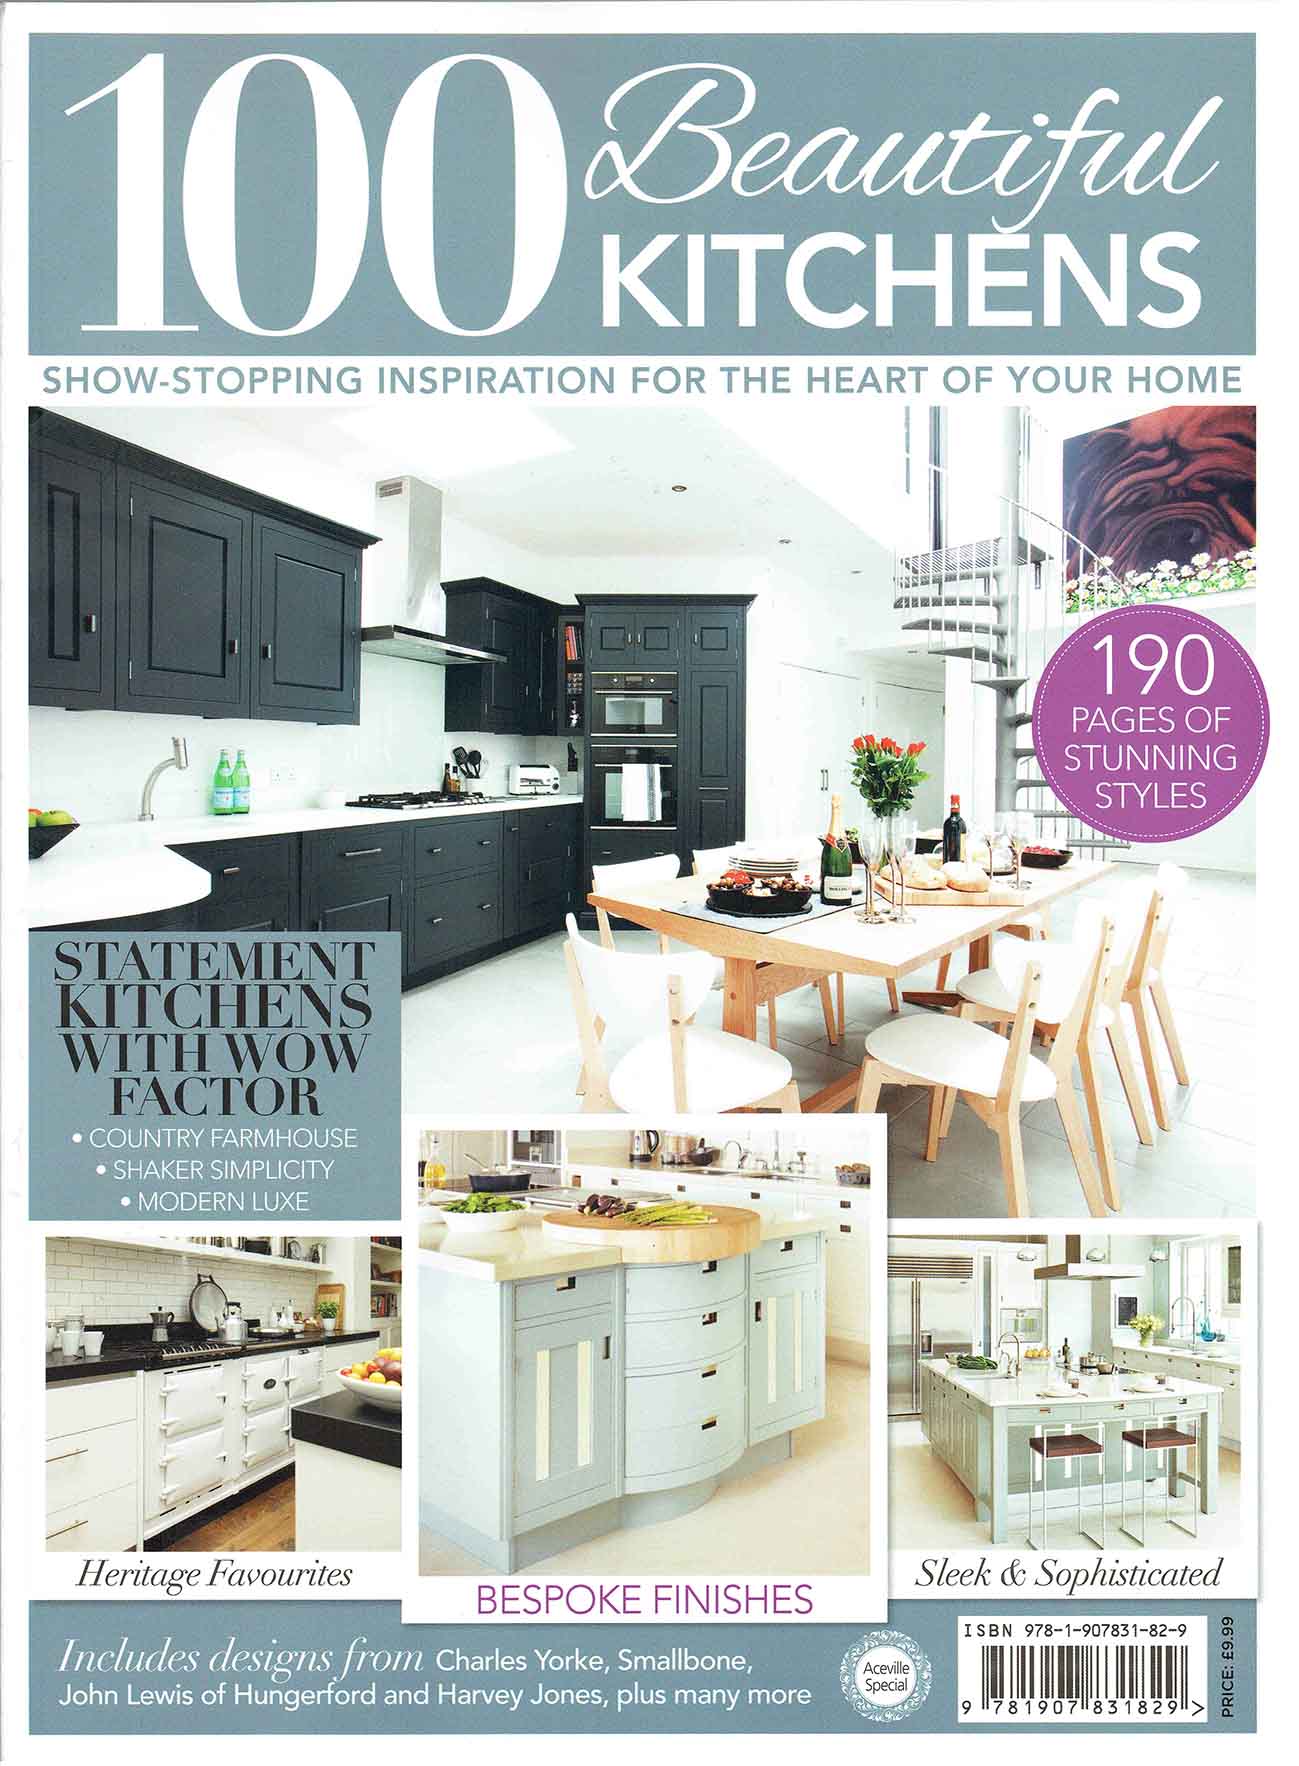 100 Beautiful Kitchens, April 2015